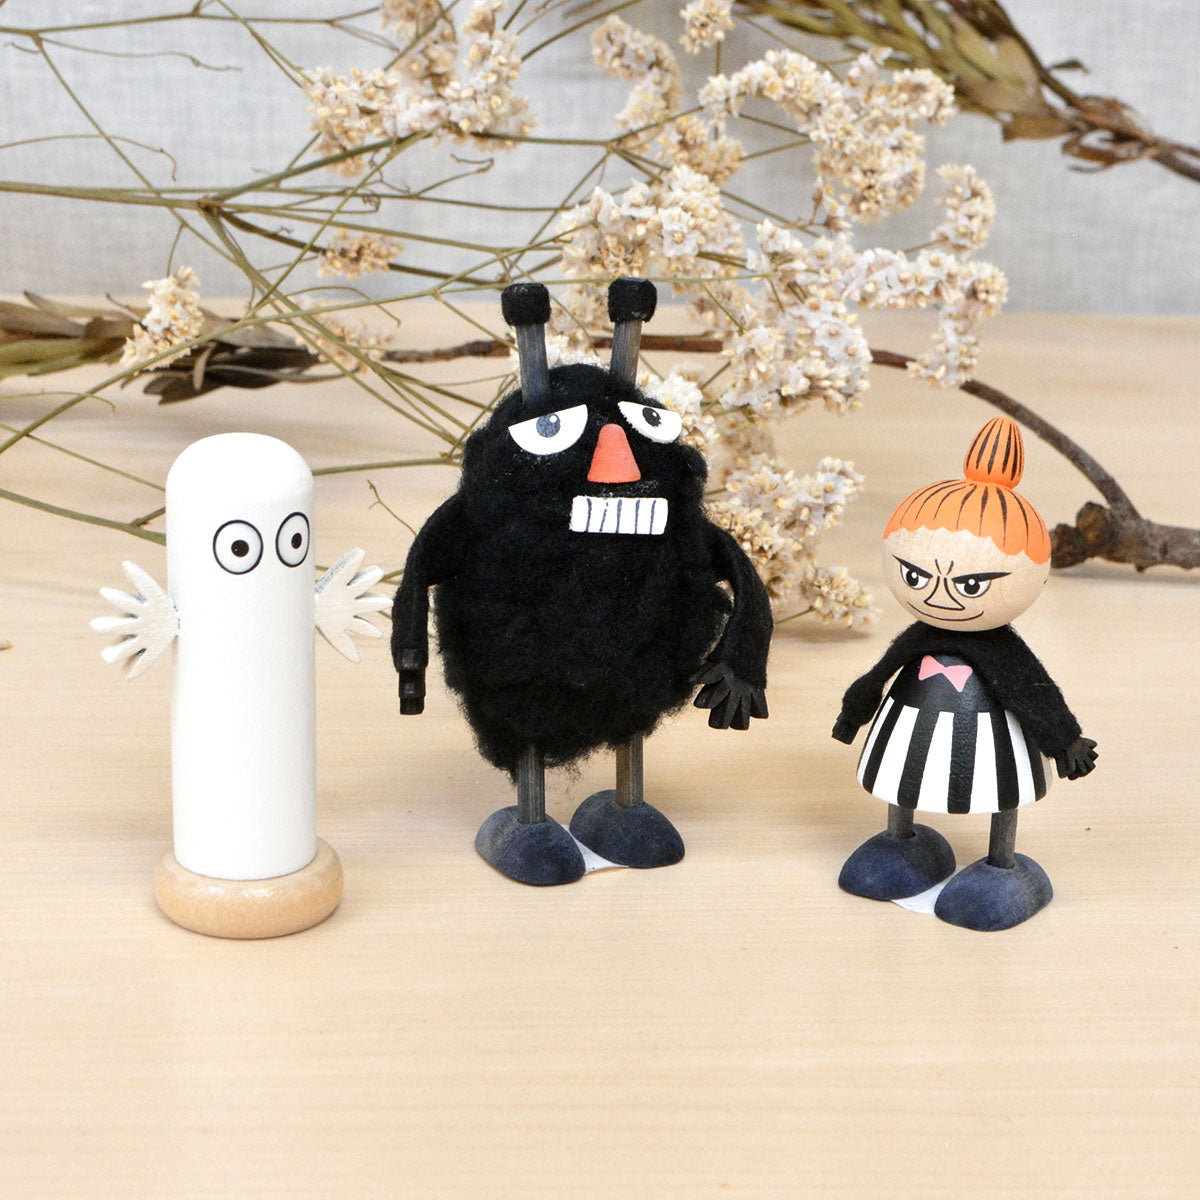 Moomin ムーミン Puulelut プーレルット 木製手描き人形 ( ニョロニョロ )